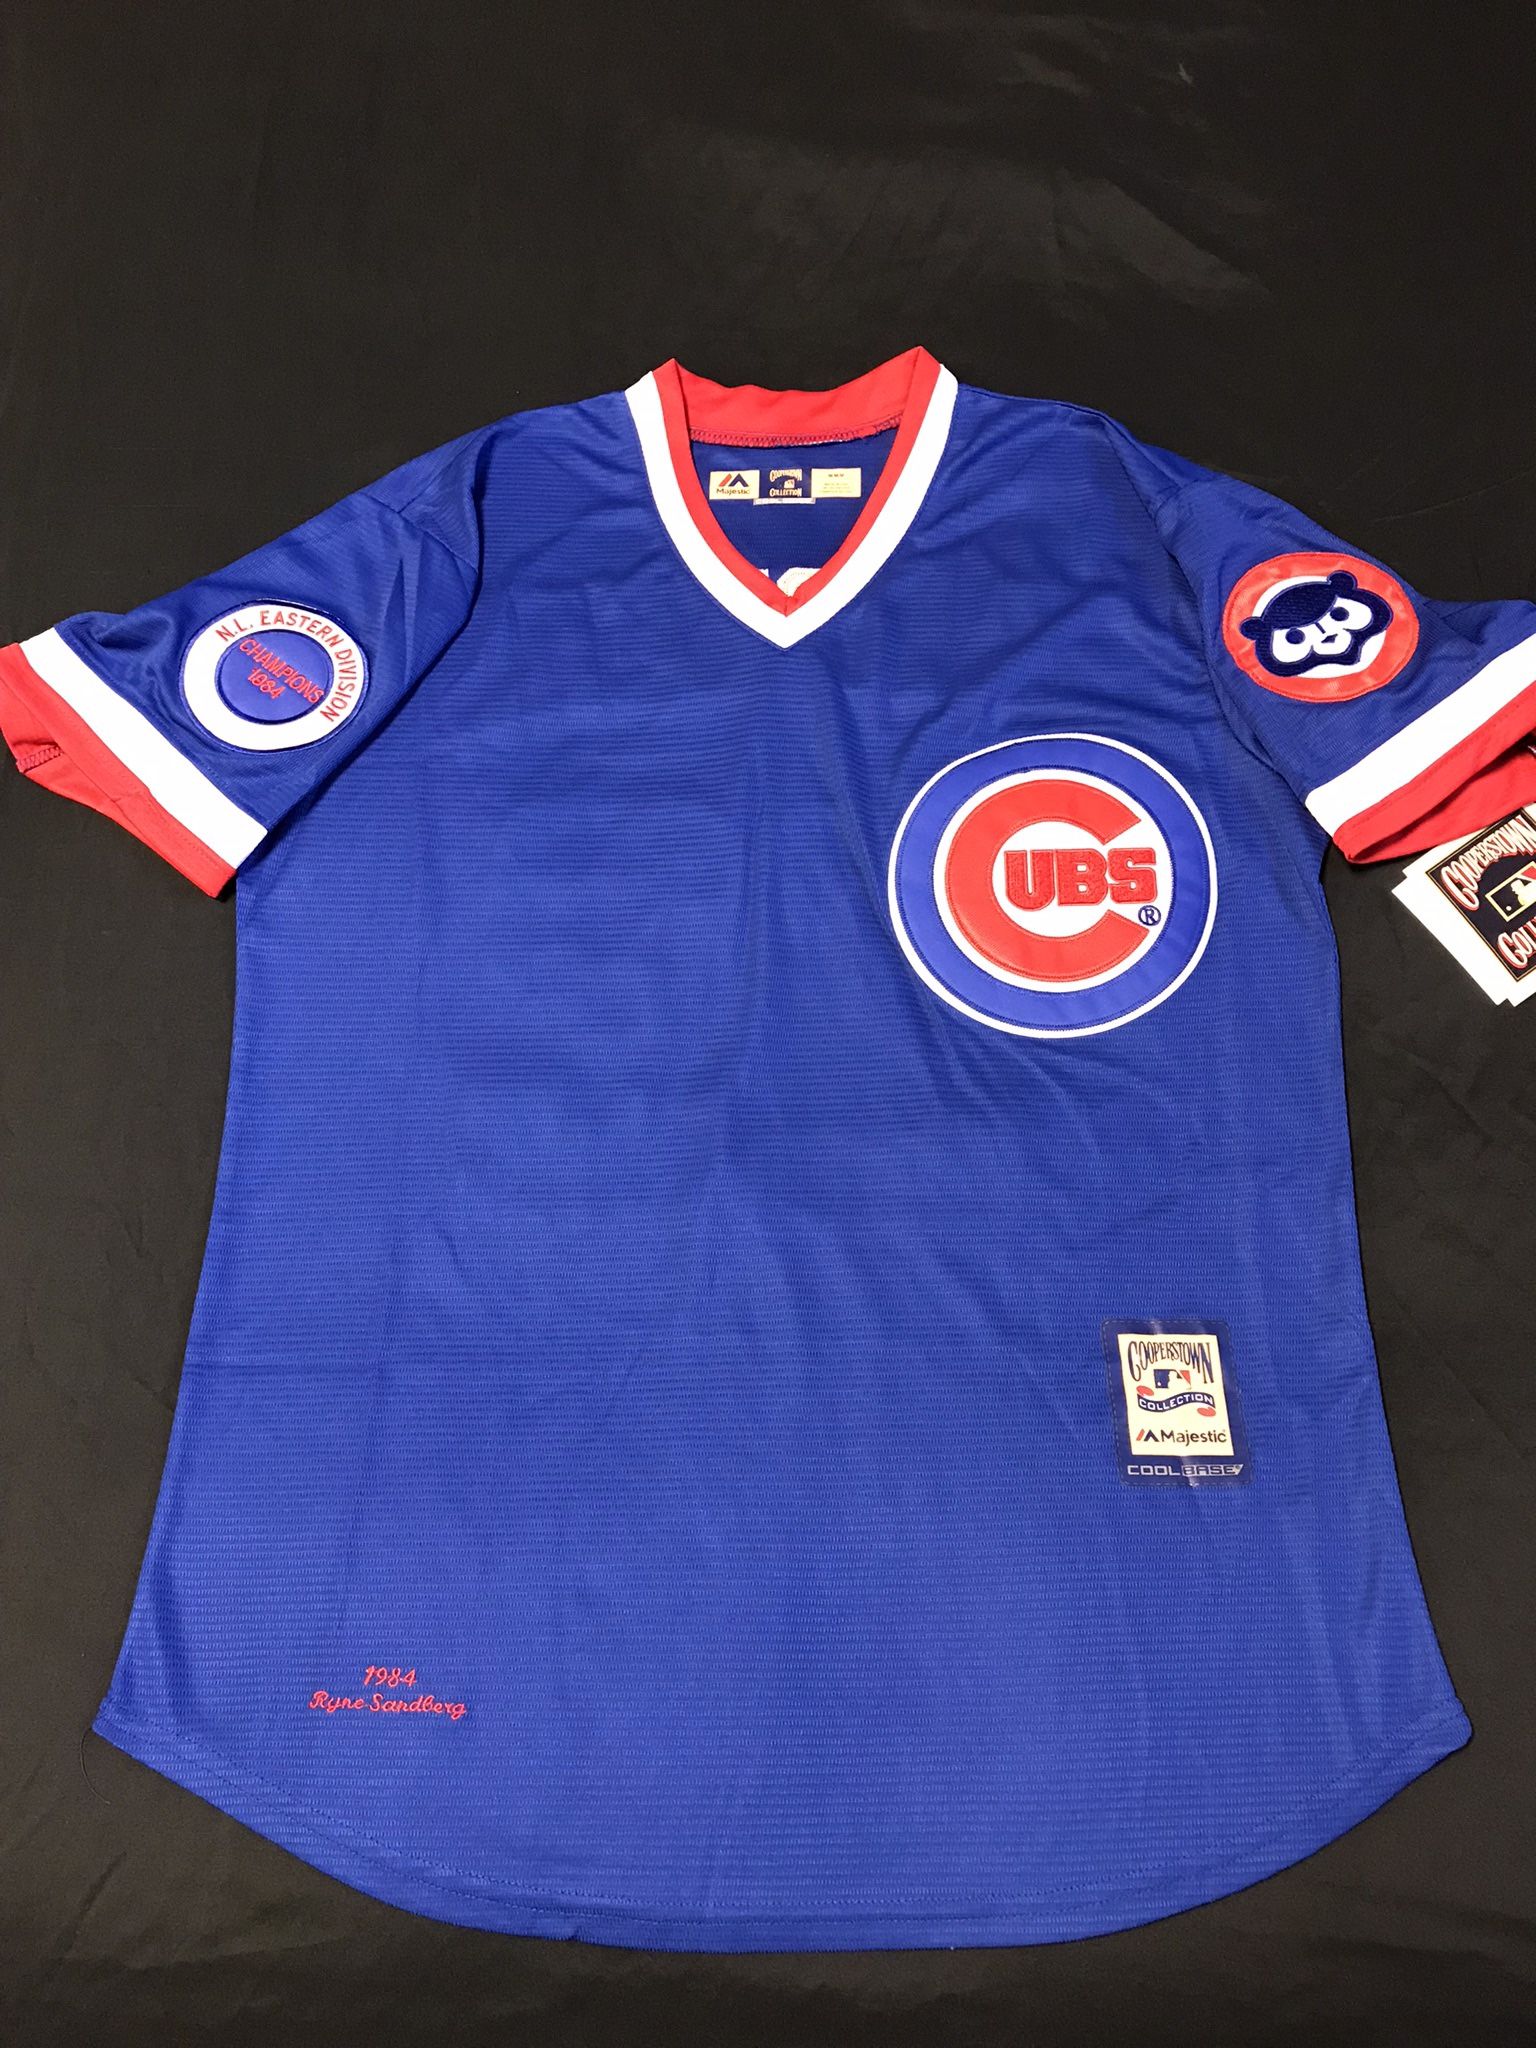 1984 cubs jersey